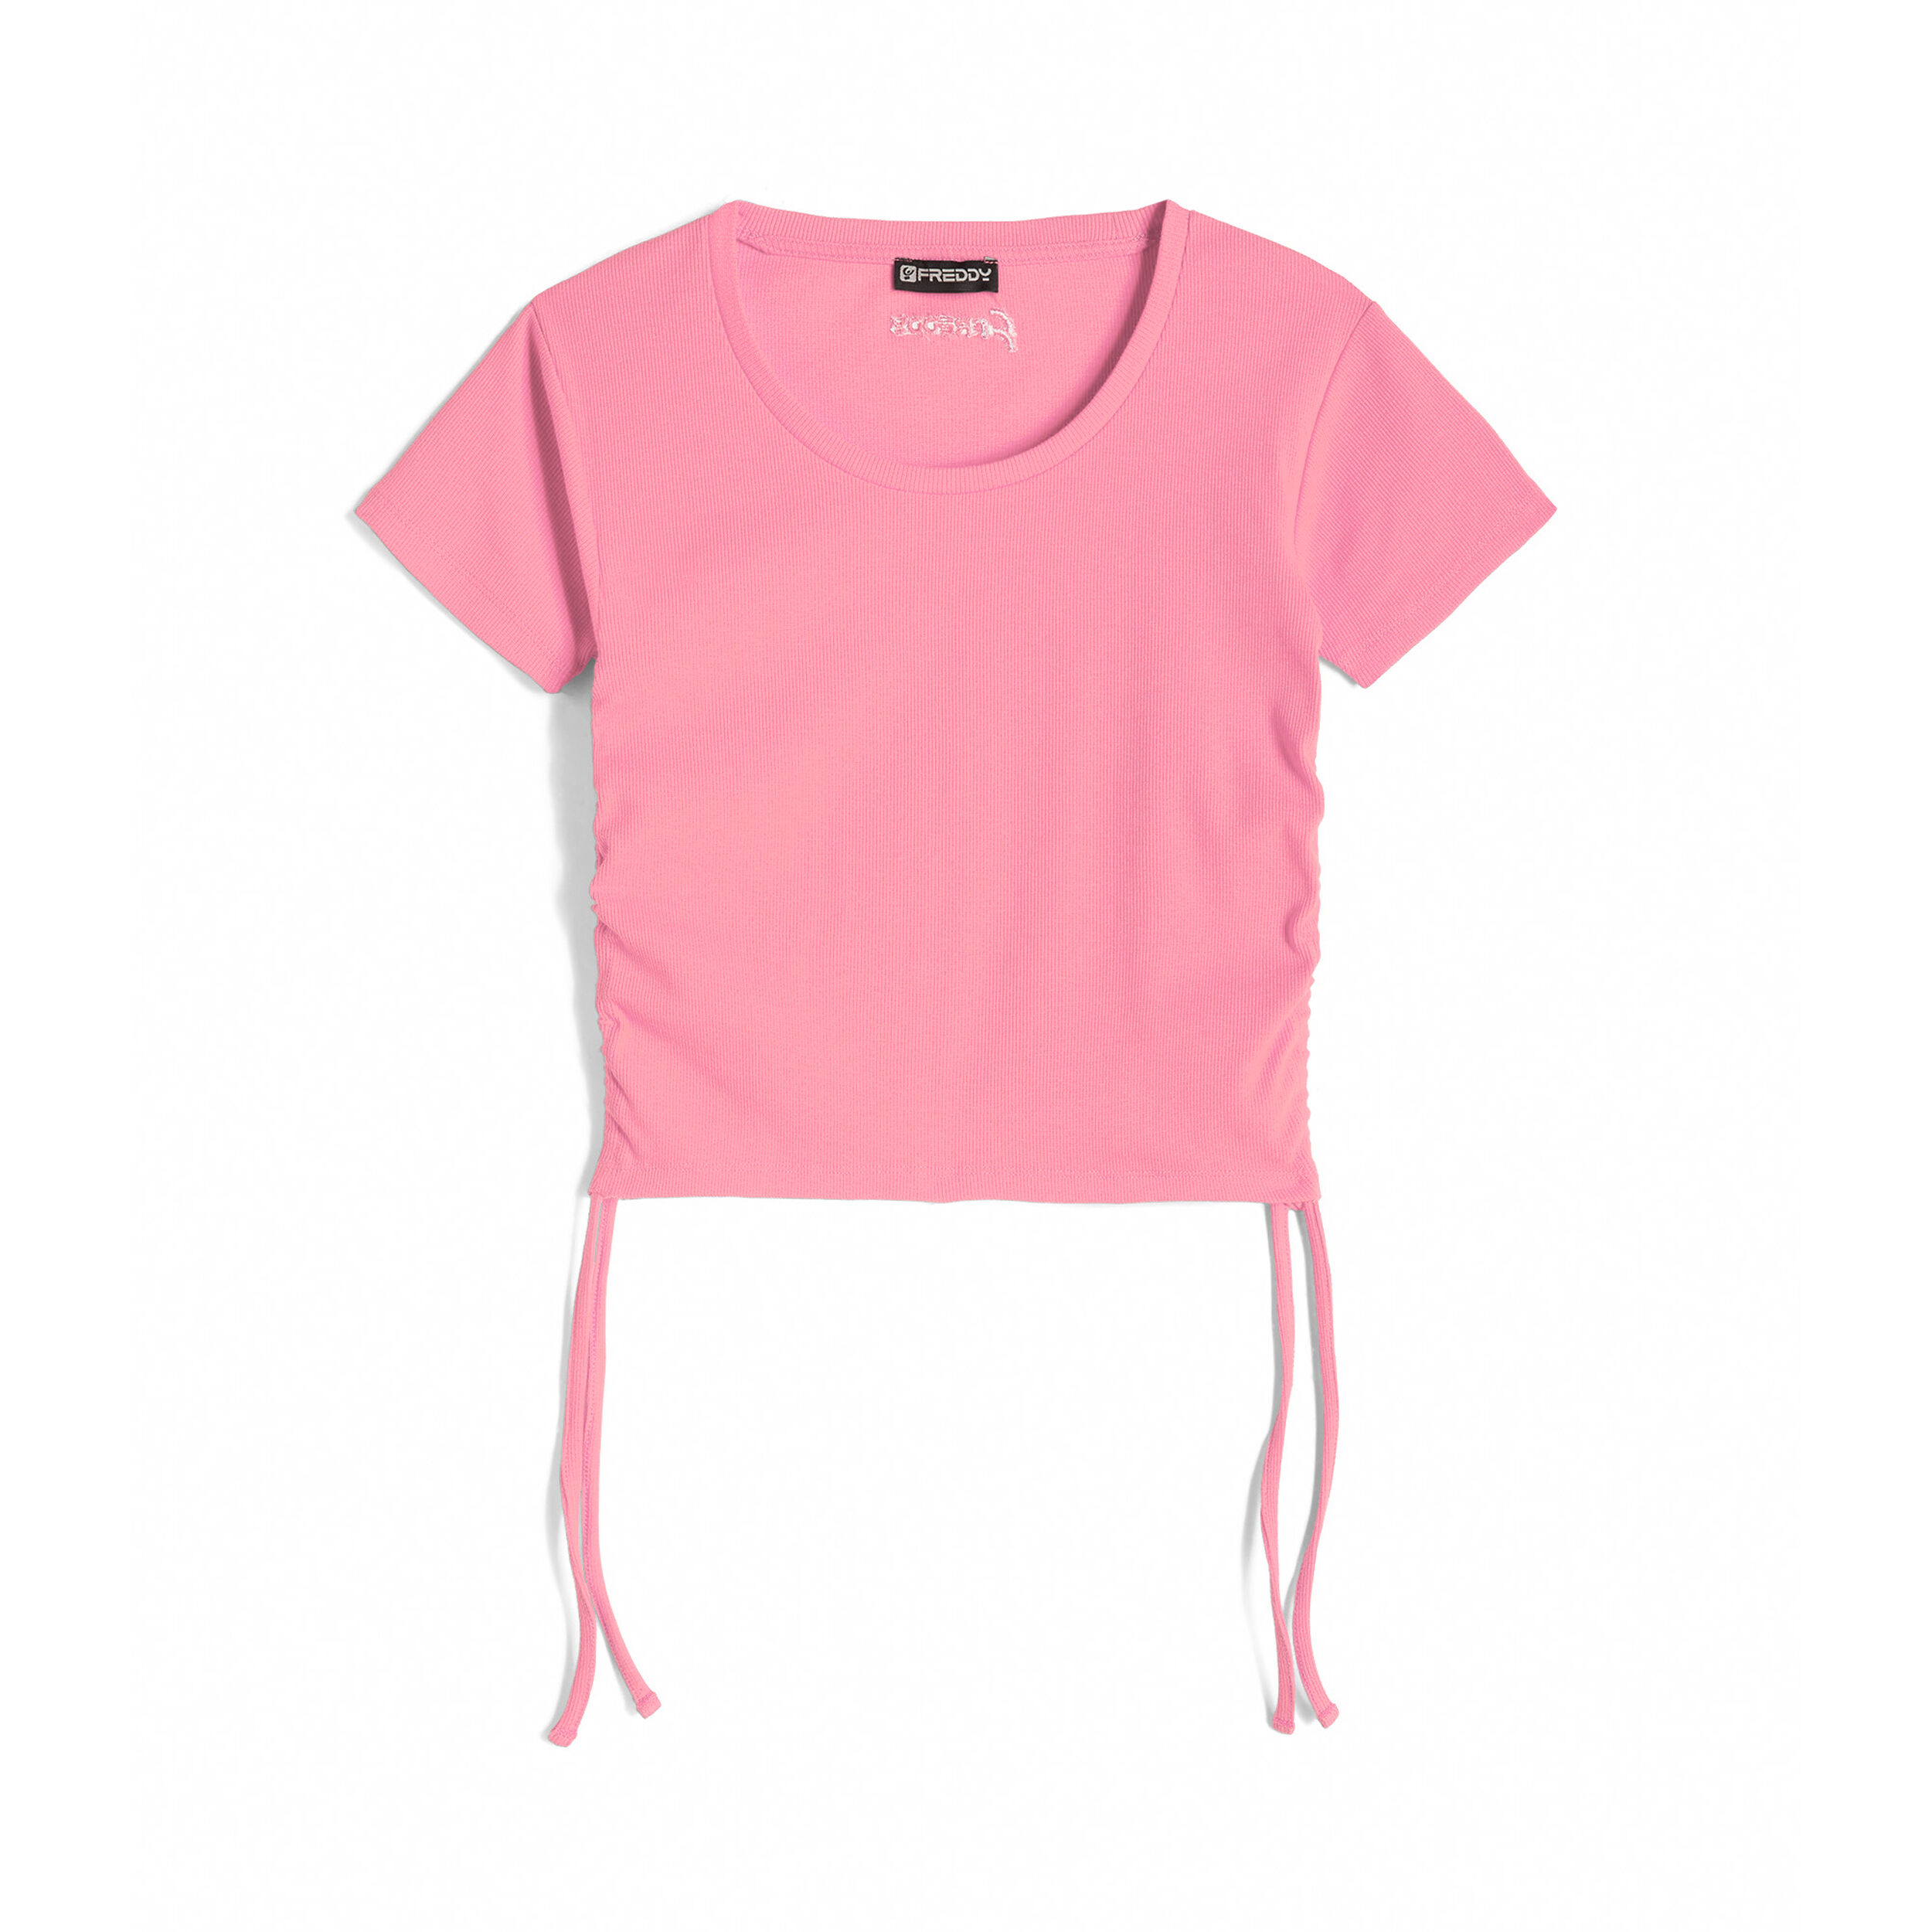 Freddy T-shirt donna slim fit in costina con laccetti sui fianchi Pink Carnation Donna Small